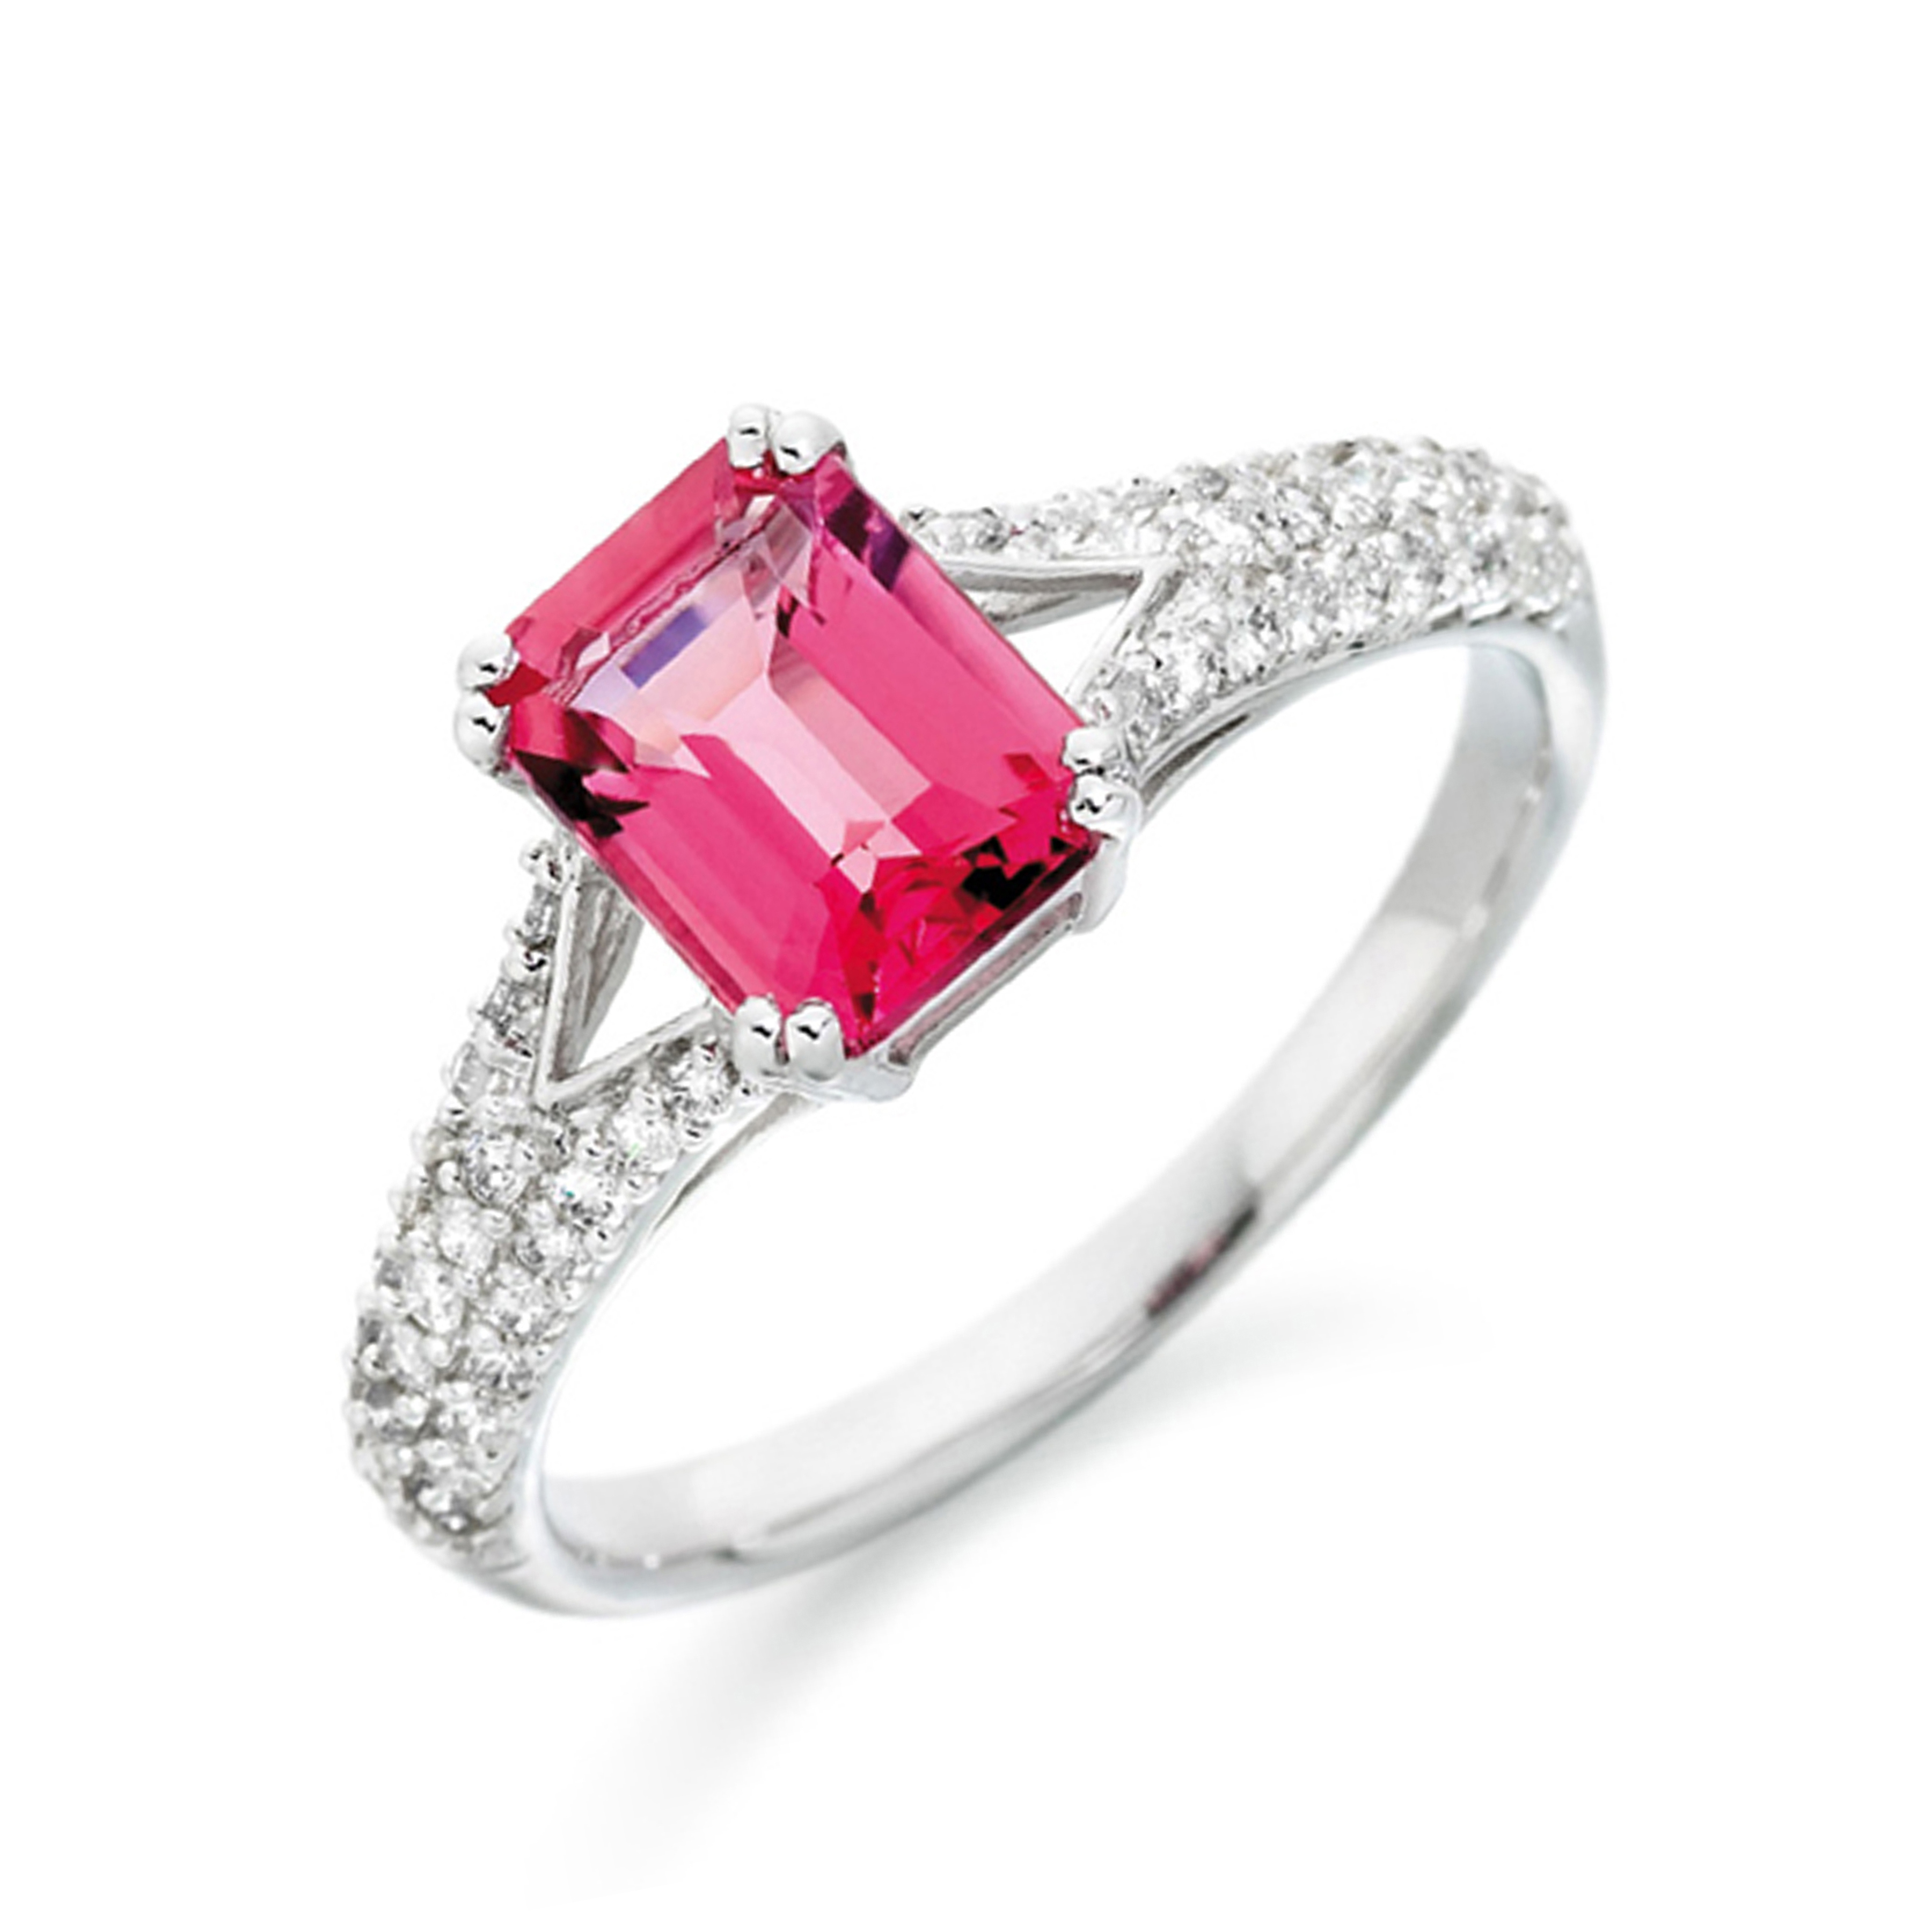 6X5mm Radiant Pink Tourmaline Stones On Shoulder Diamond And Gemstone Engagement Ring